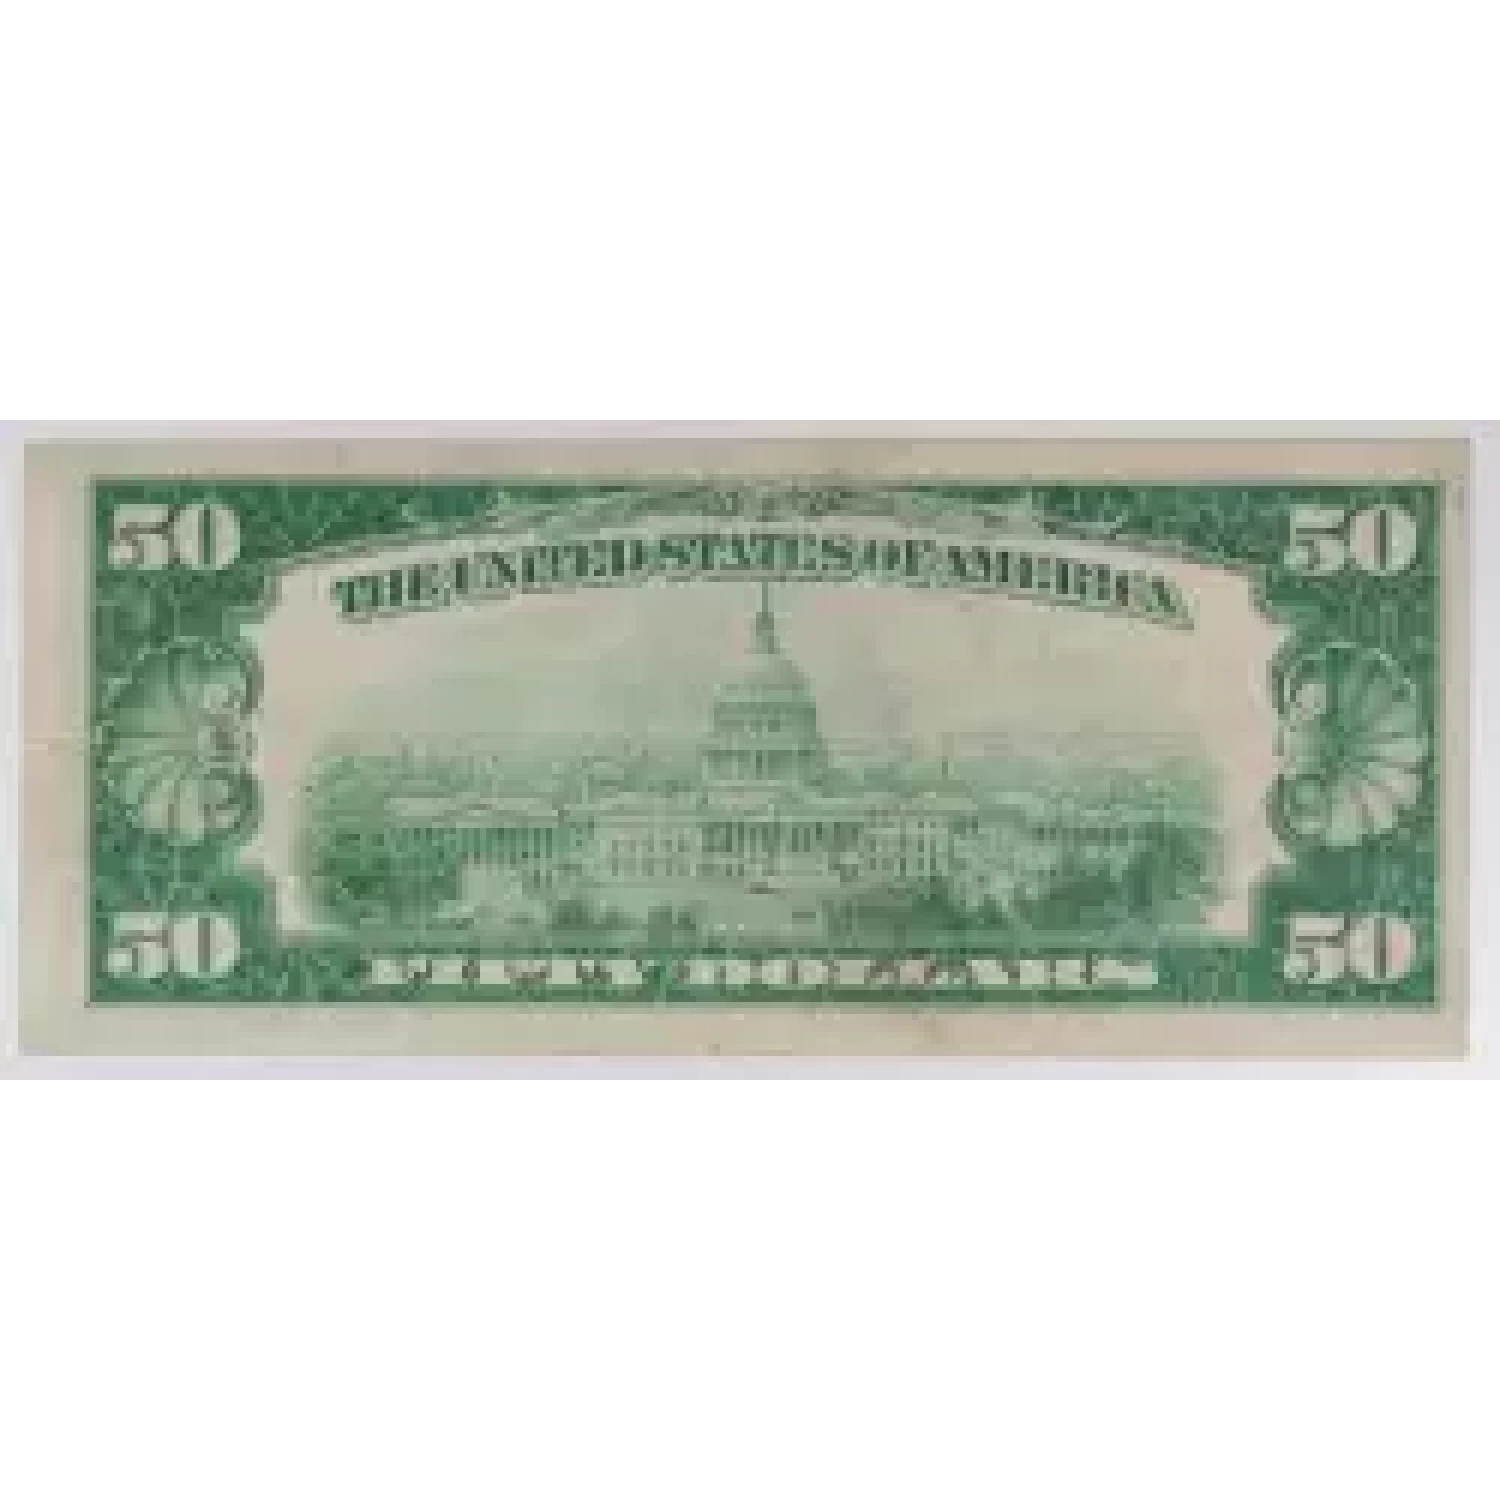 $50 1929 small brown seal. Small National Bank Notes 1803-1